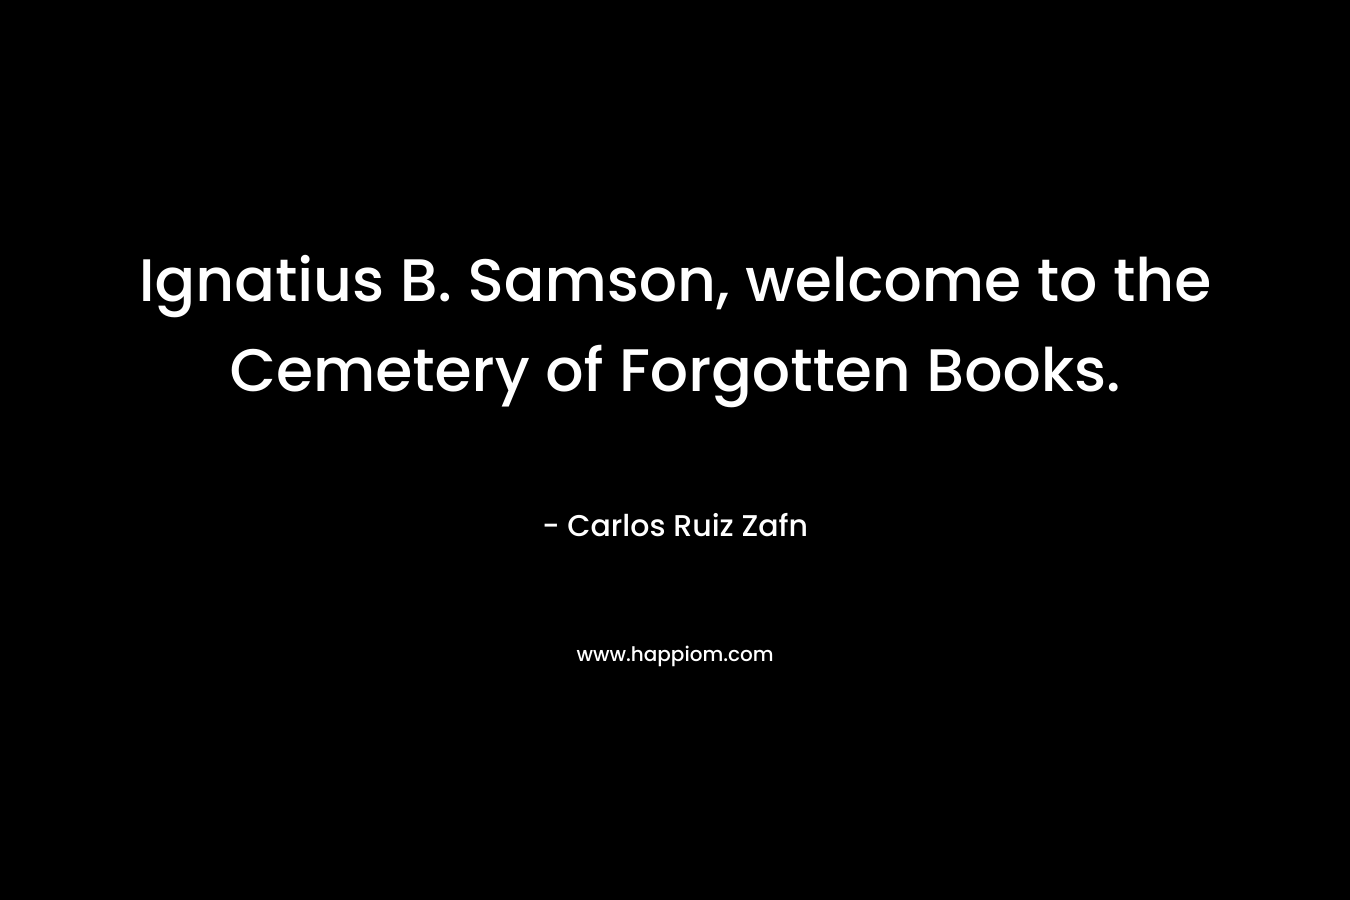 Ignatius B. Samson, welcome to the Cemetery of Forgotten Books.